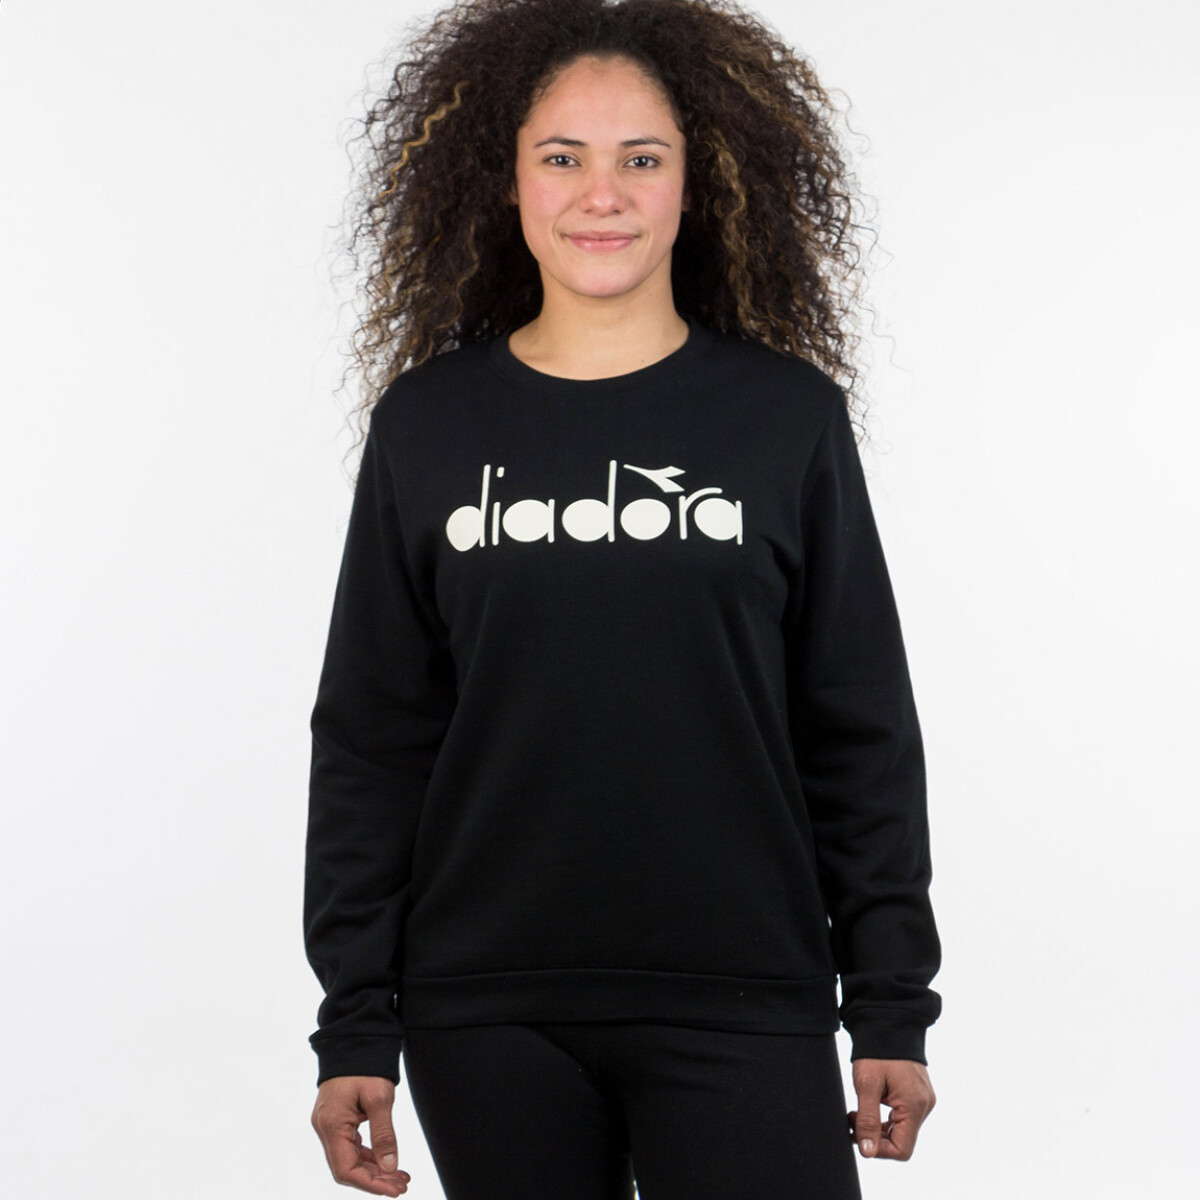 Diadora Buzo Ladies Crew Neck Sweater With Print Black - Negro 